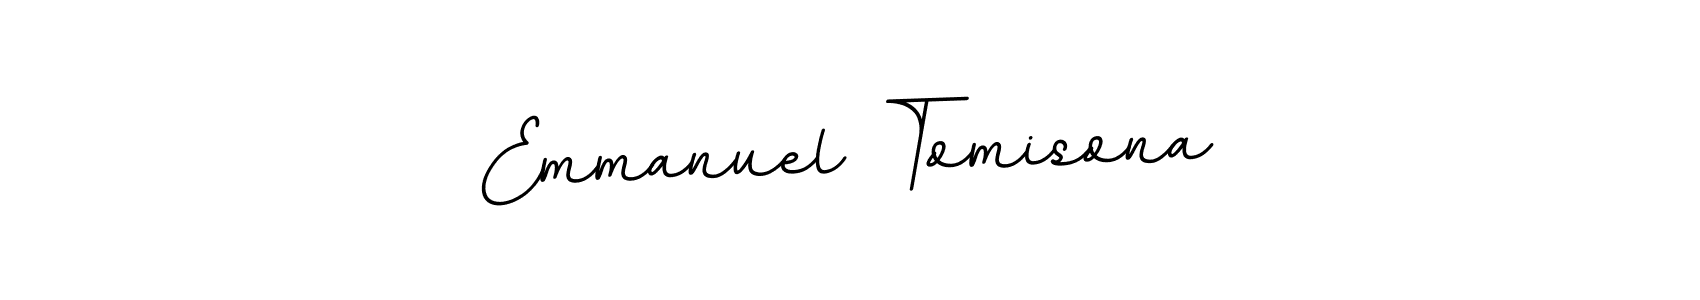 How to Draw Emmanuel Tomisona signature style? BallpointsItalic-DORy9 is a latest design signature styles for name Emmanuel Tomisona. Emmanuel Tomisona signature style 11 images and pictures png